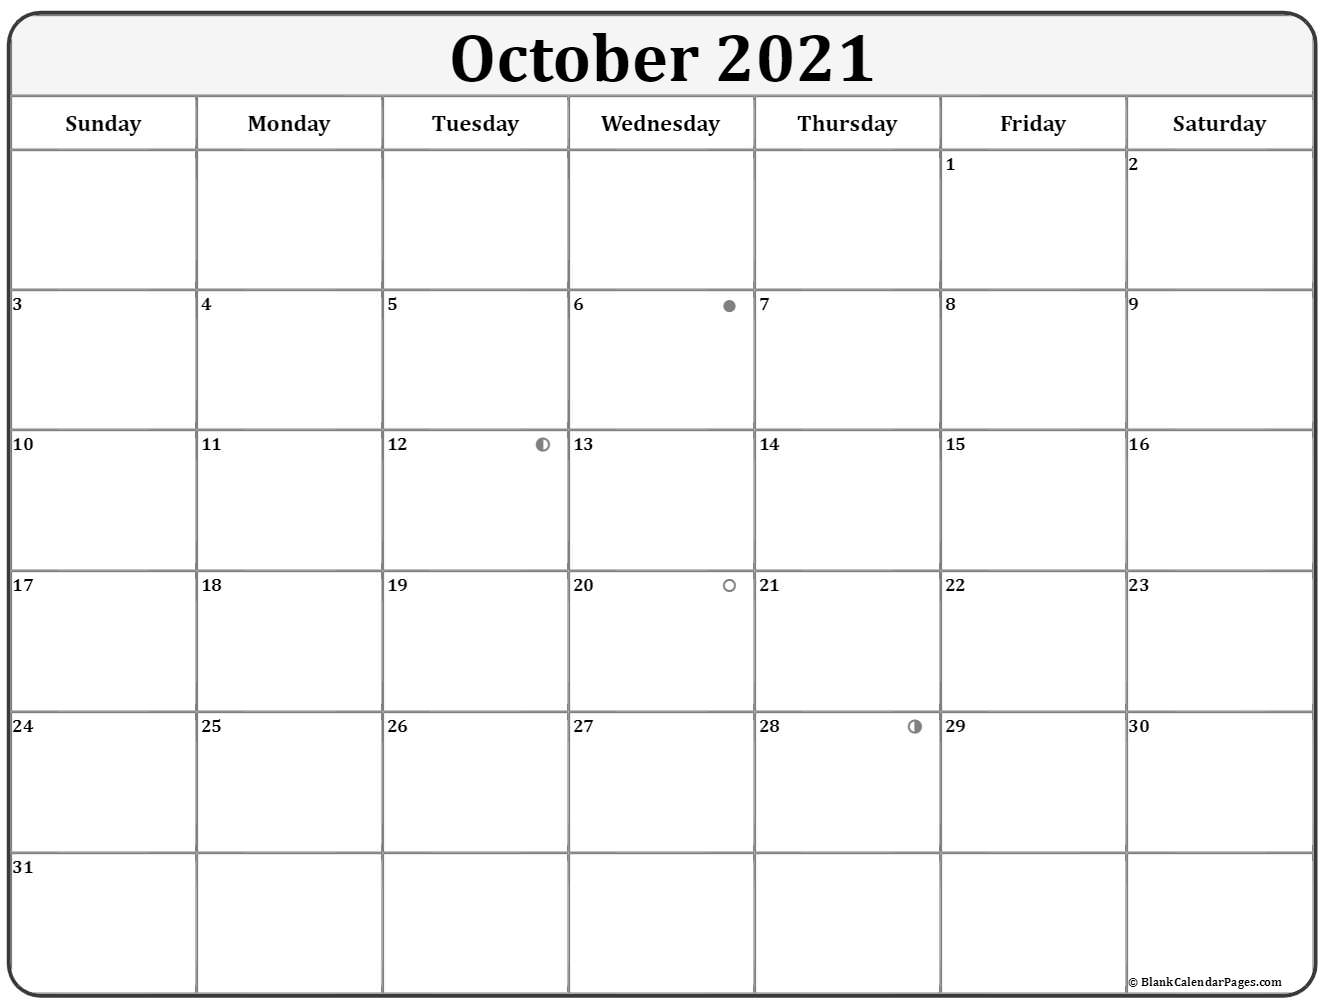 October 2021 Lunar Calendar | Moon Phase Calendar